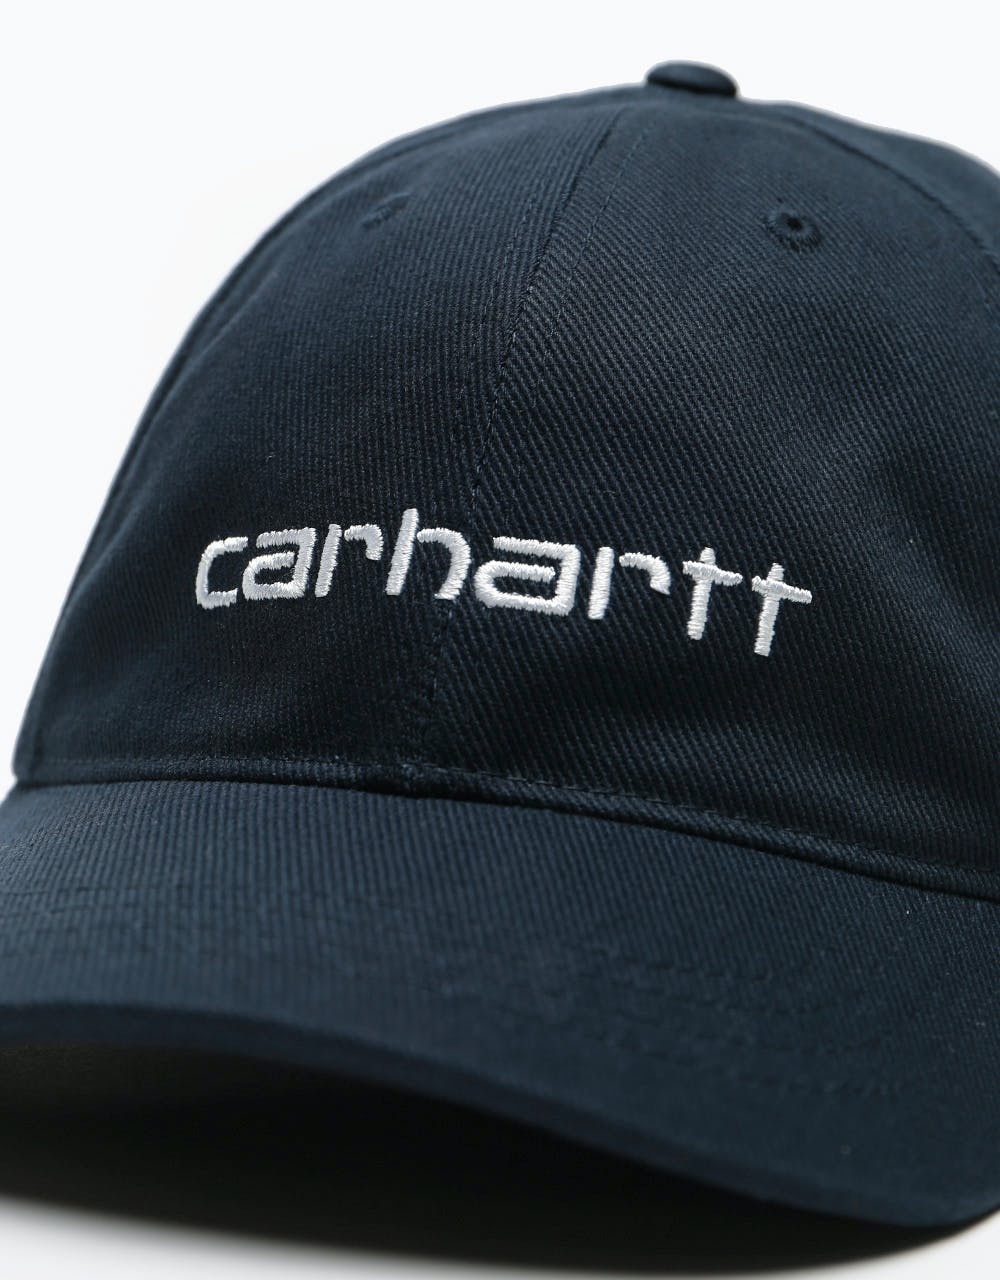 Carhartt WIP Carter Cap - Dark Navy/White